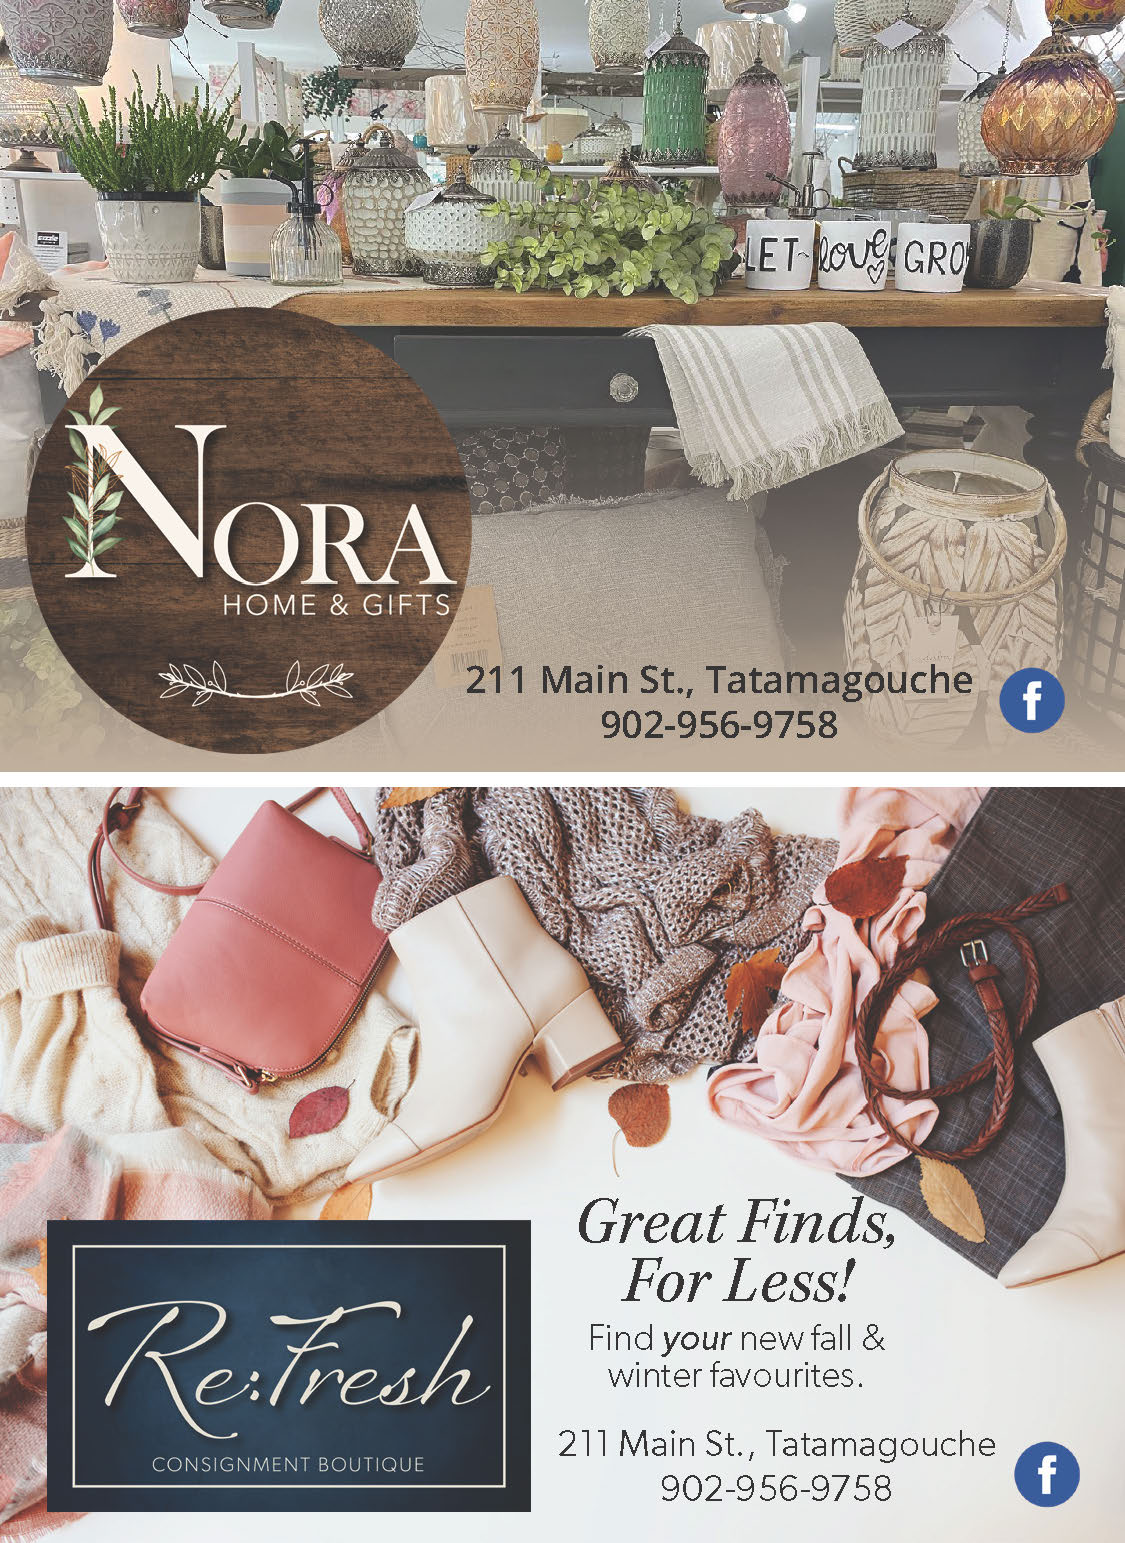 Nora Home & Gifts, Tatamagouche, Nova Scotia advertisement